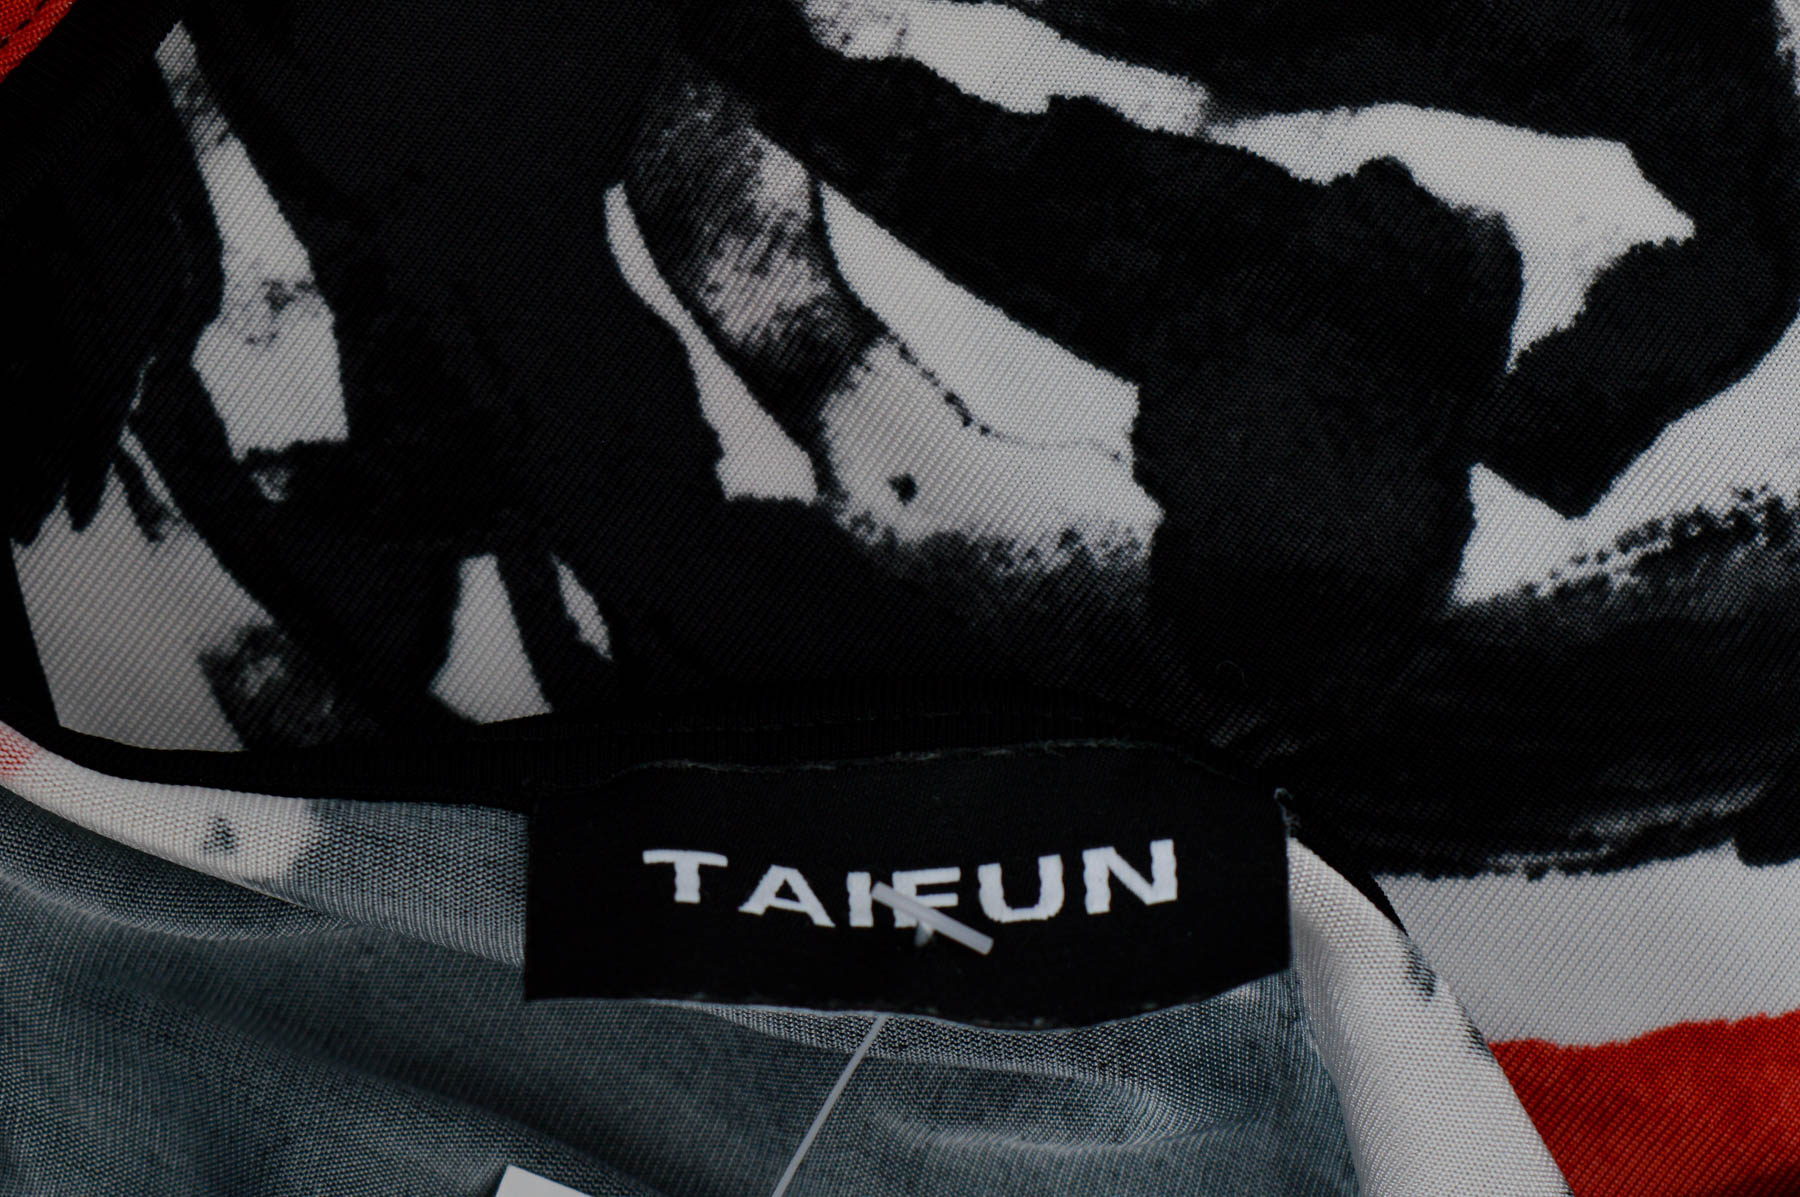 Women's tunic - TAIFUN - 2